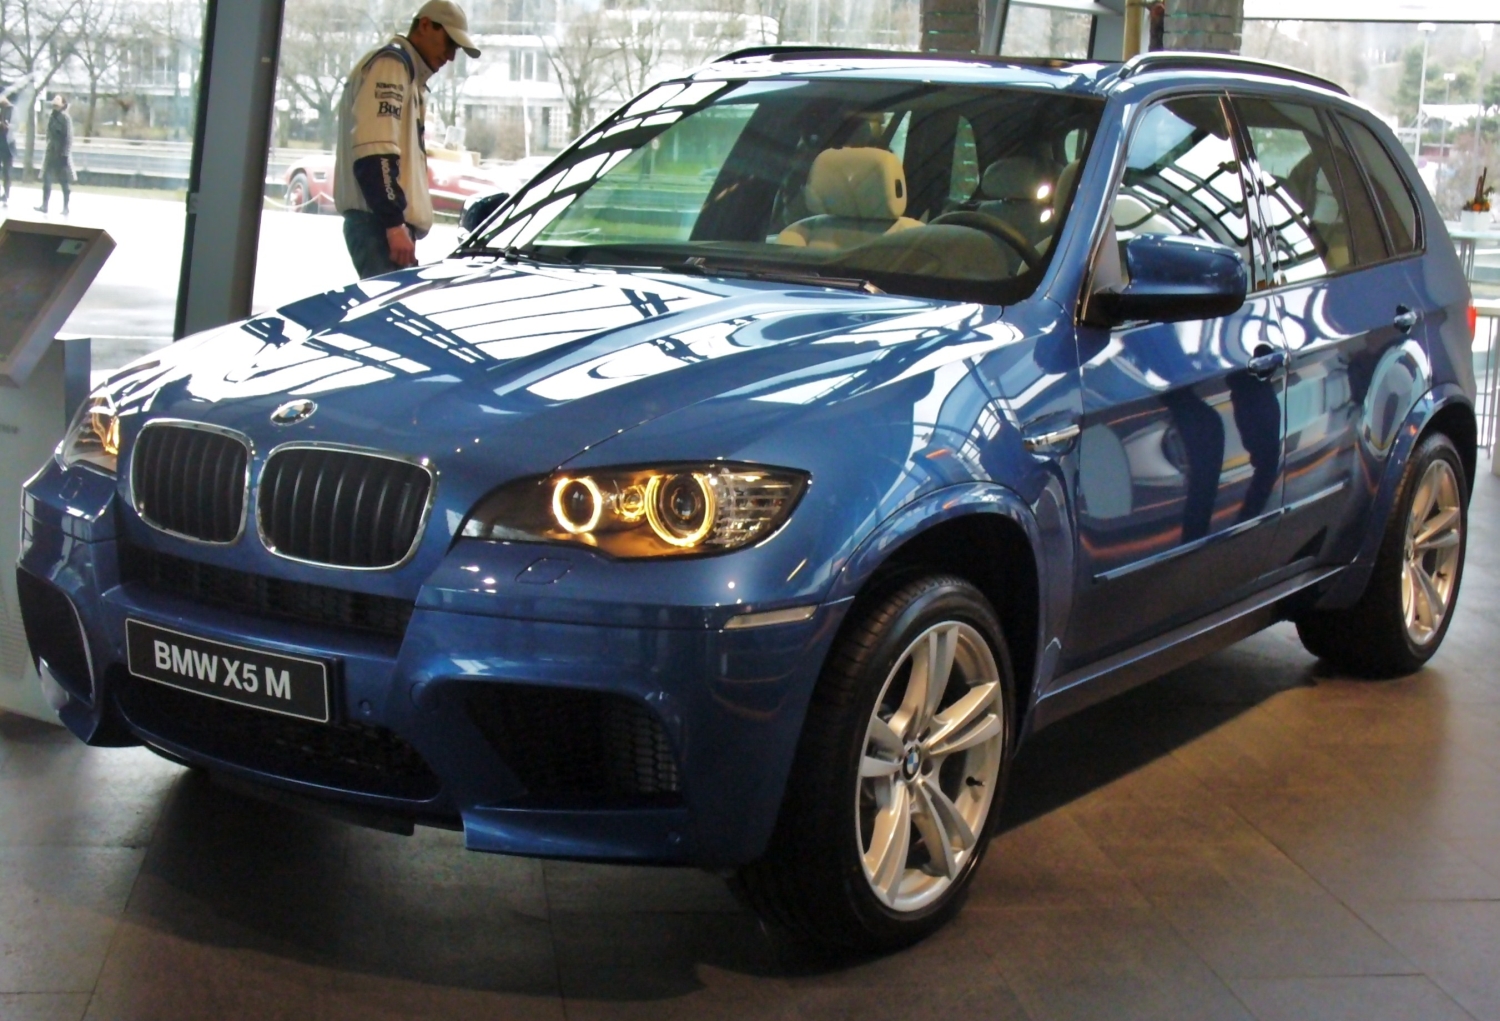 Datei:BMW.svg – Wikipedia